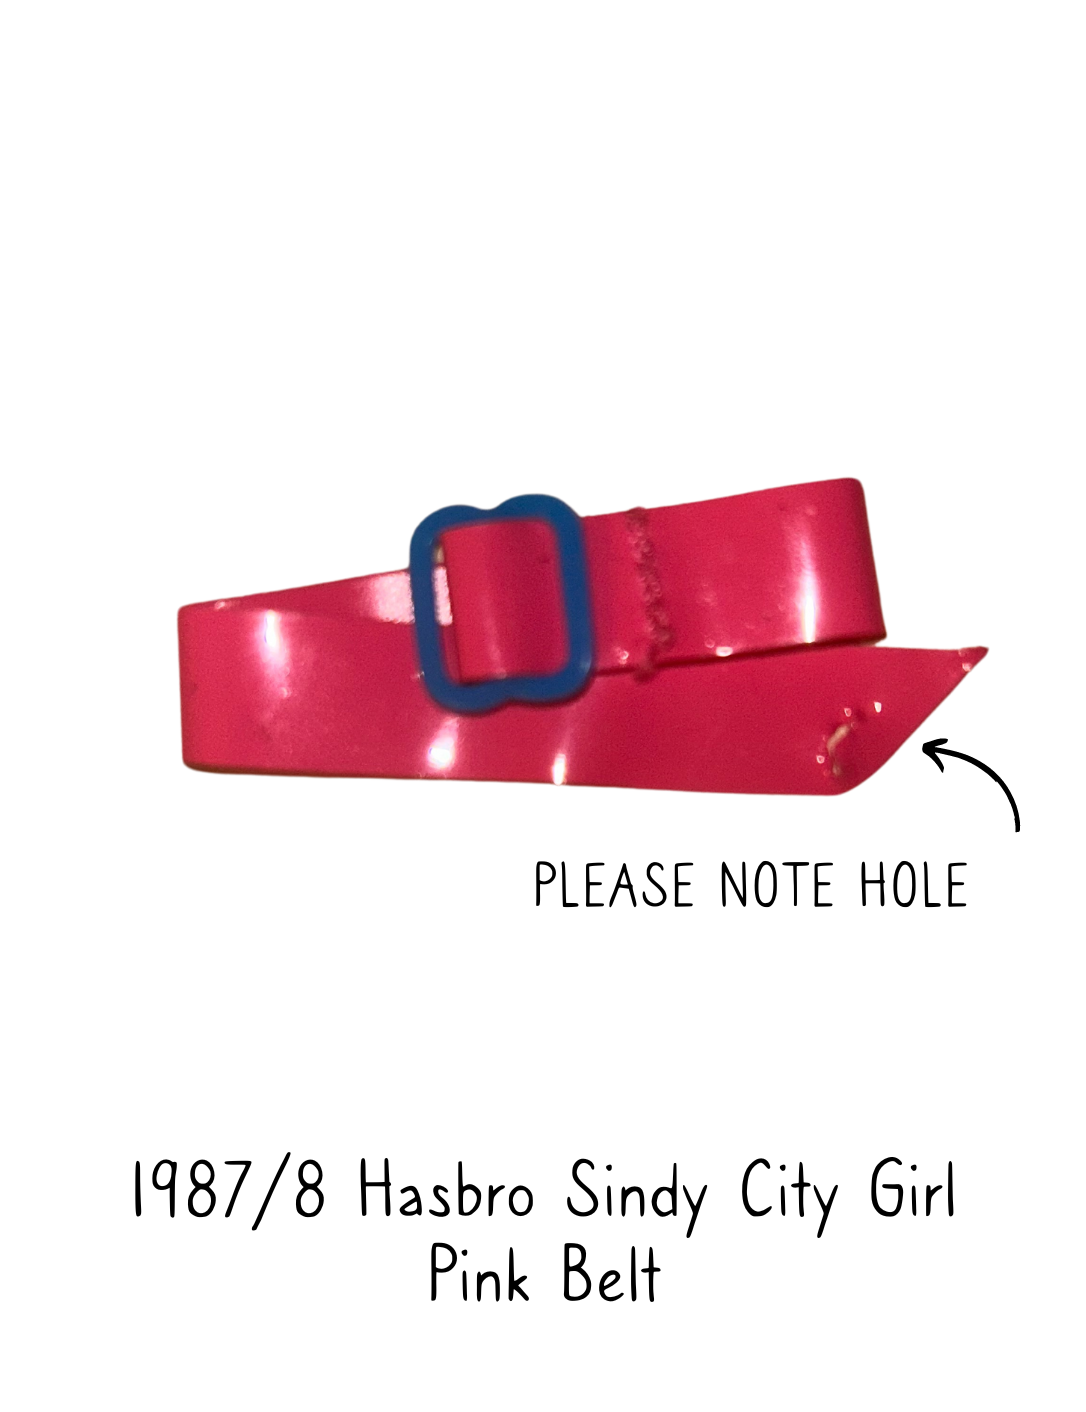 1987 Hasbro Sindy City Girl Pink Belt with Damage